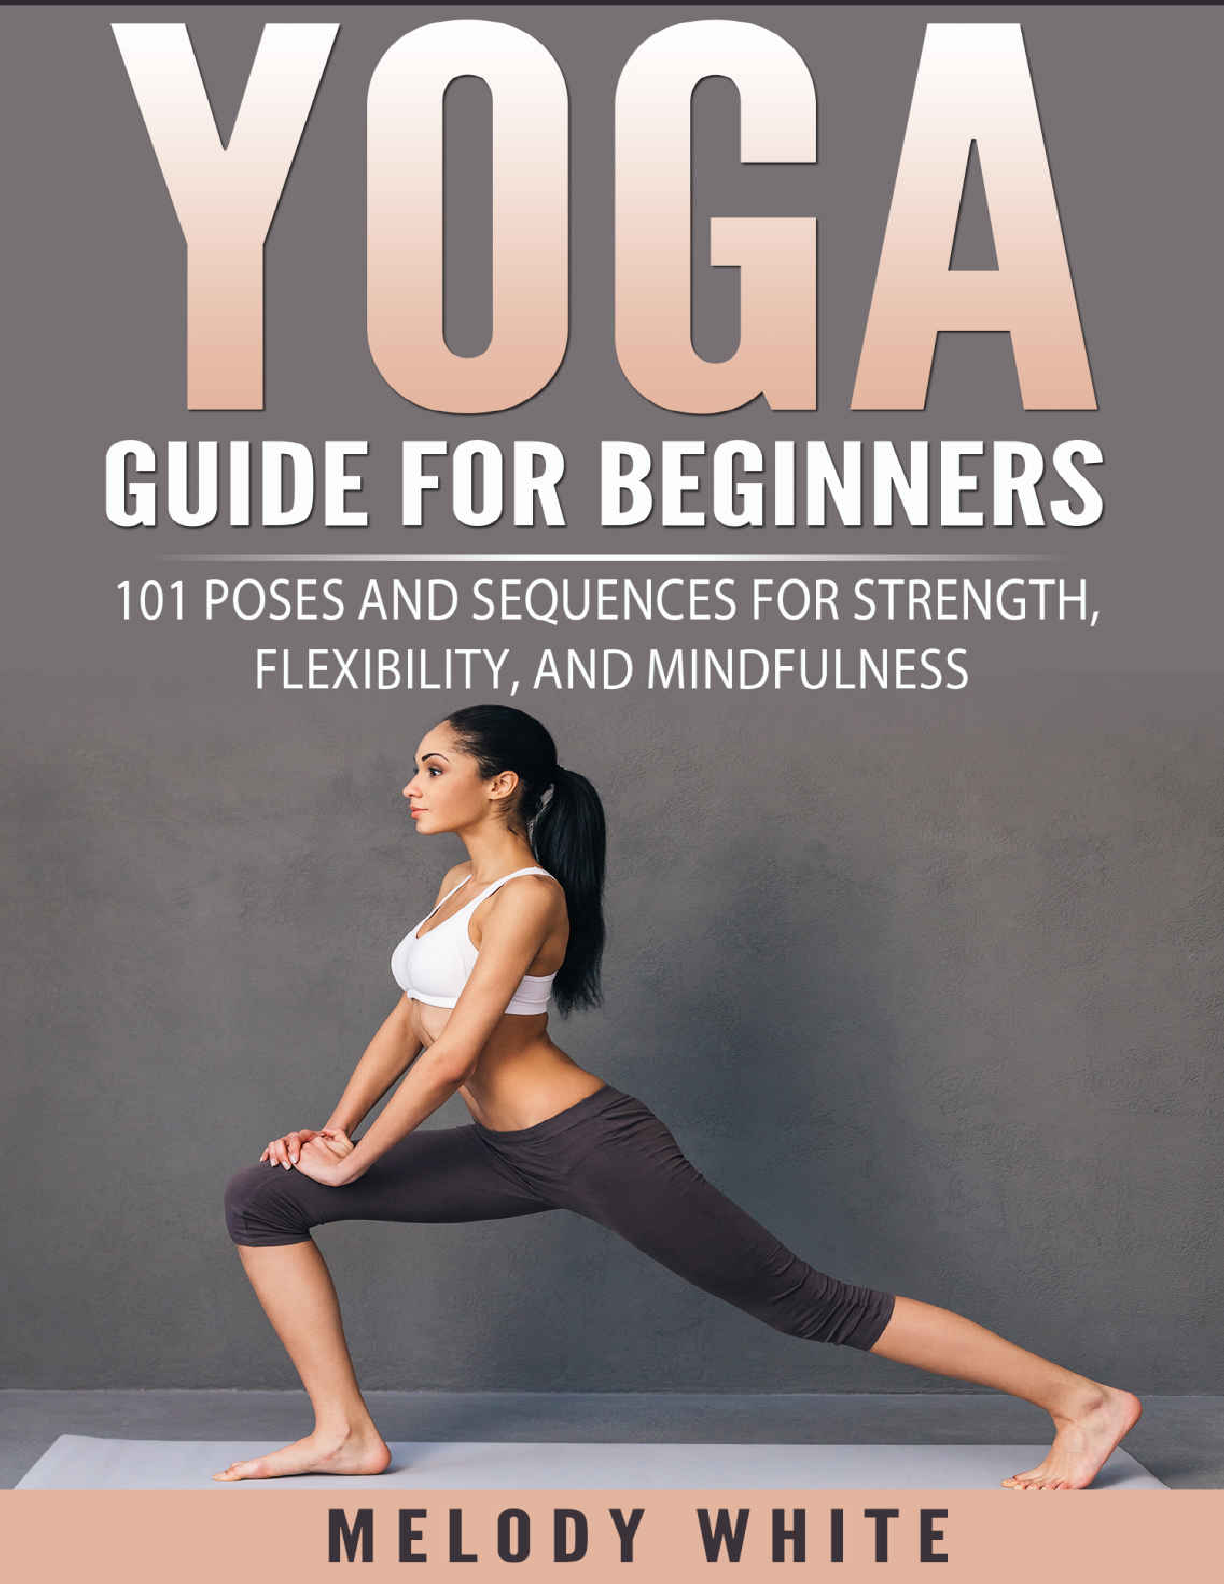 Yoga Sequencing Skills: Sequence to Forearm Stand (Pincha Mayurasana)